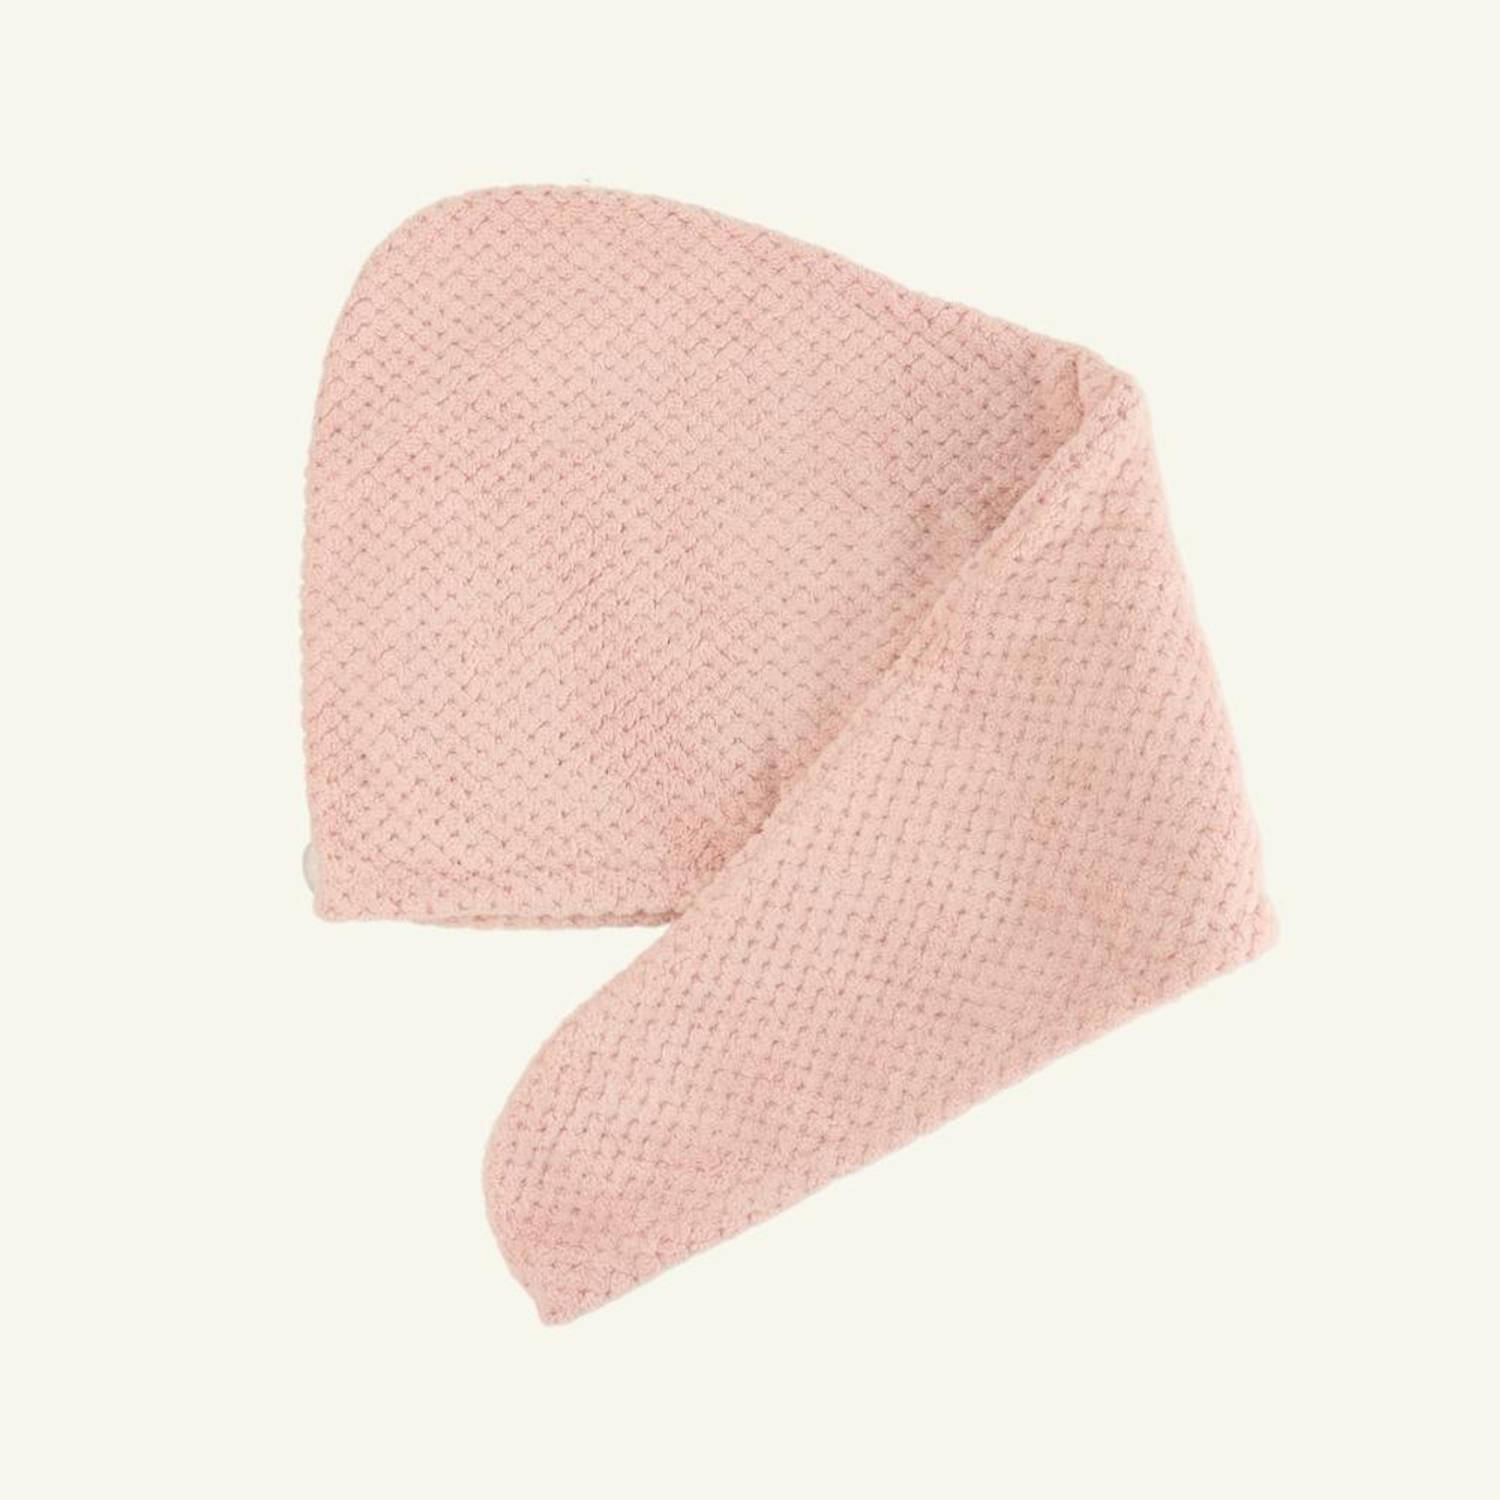 MARBEAUX Haarhanddoek - Hair towel - Hoofdhanddoek - Microvezel Badstof - Licht roze - Handdoek | Blokker